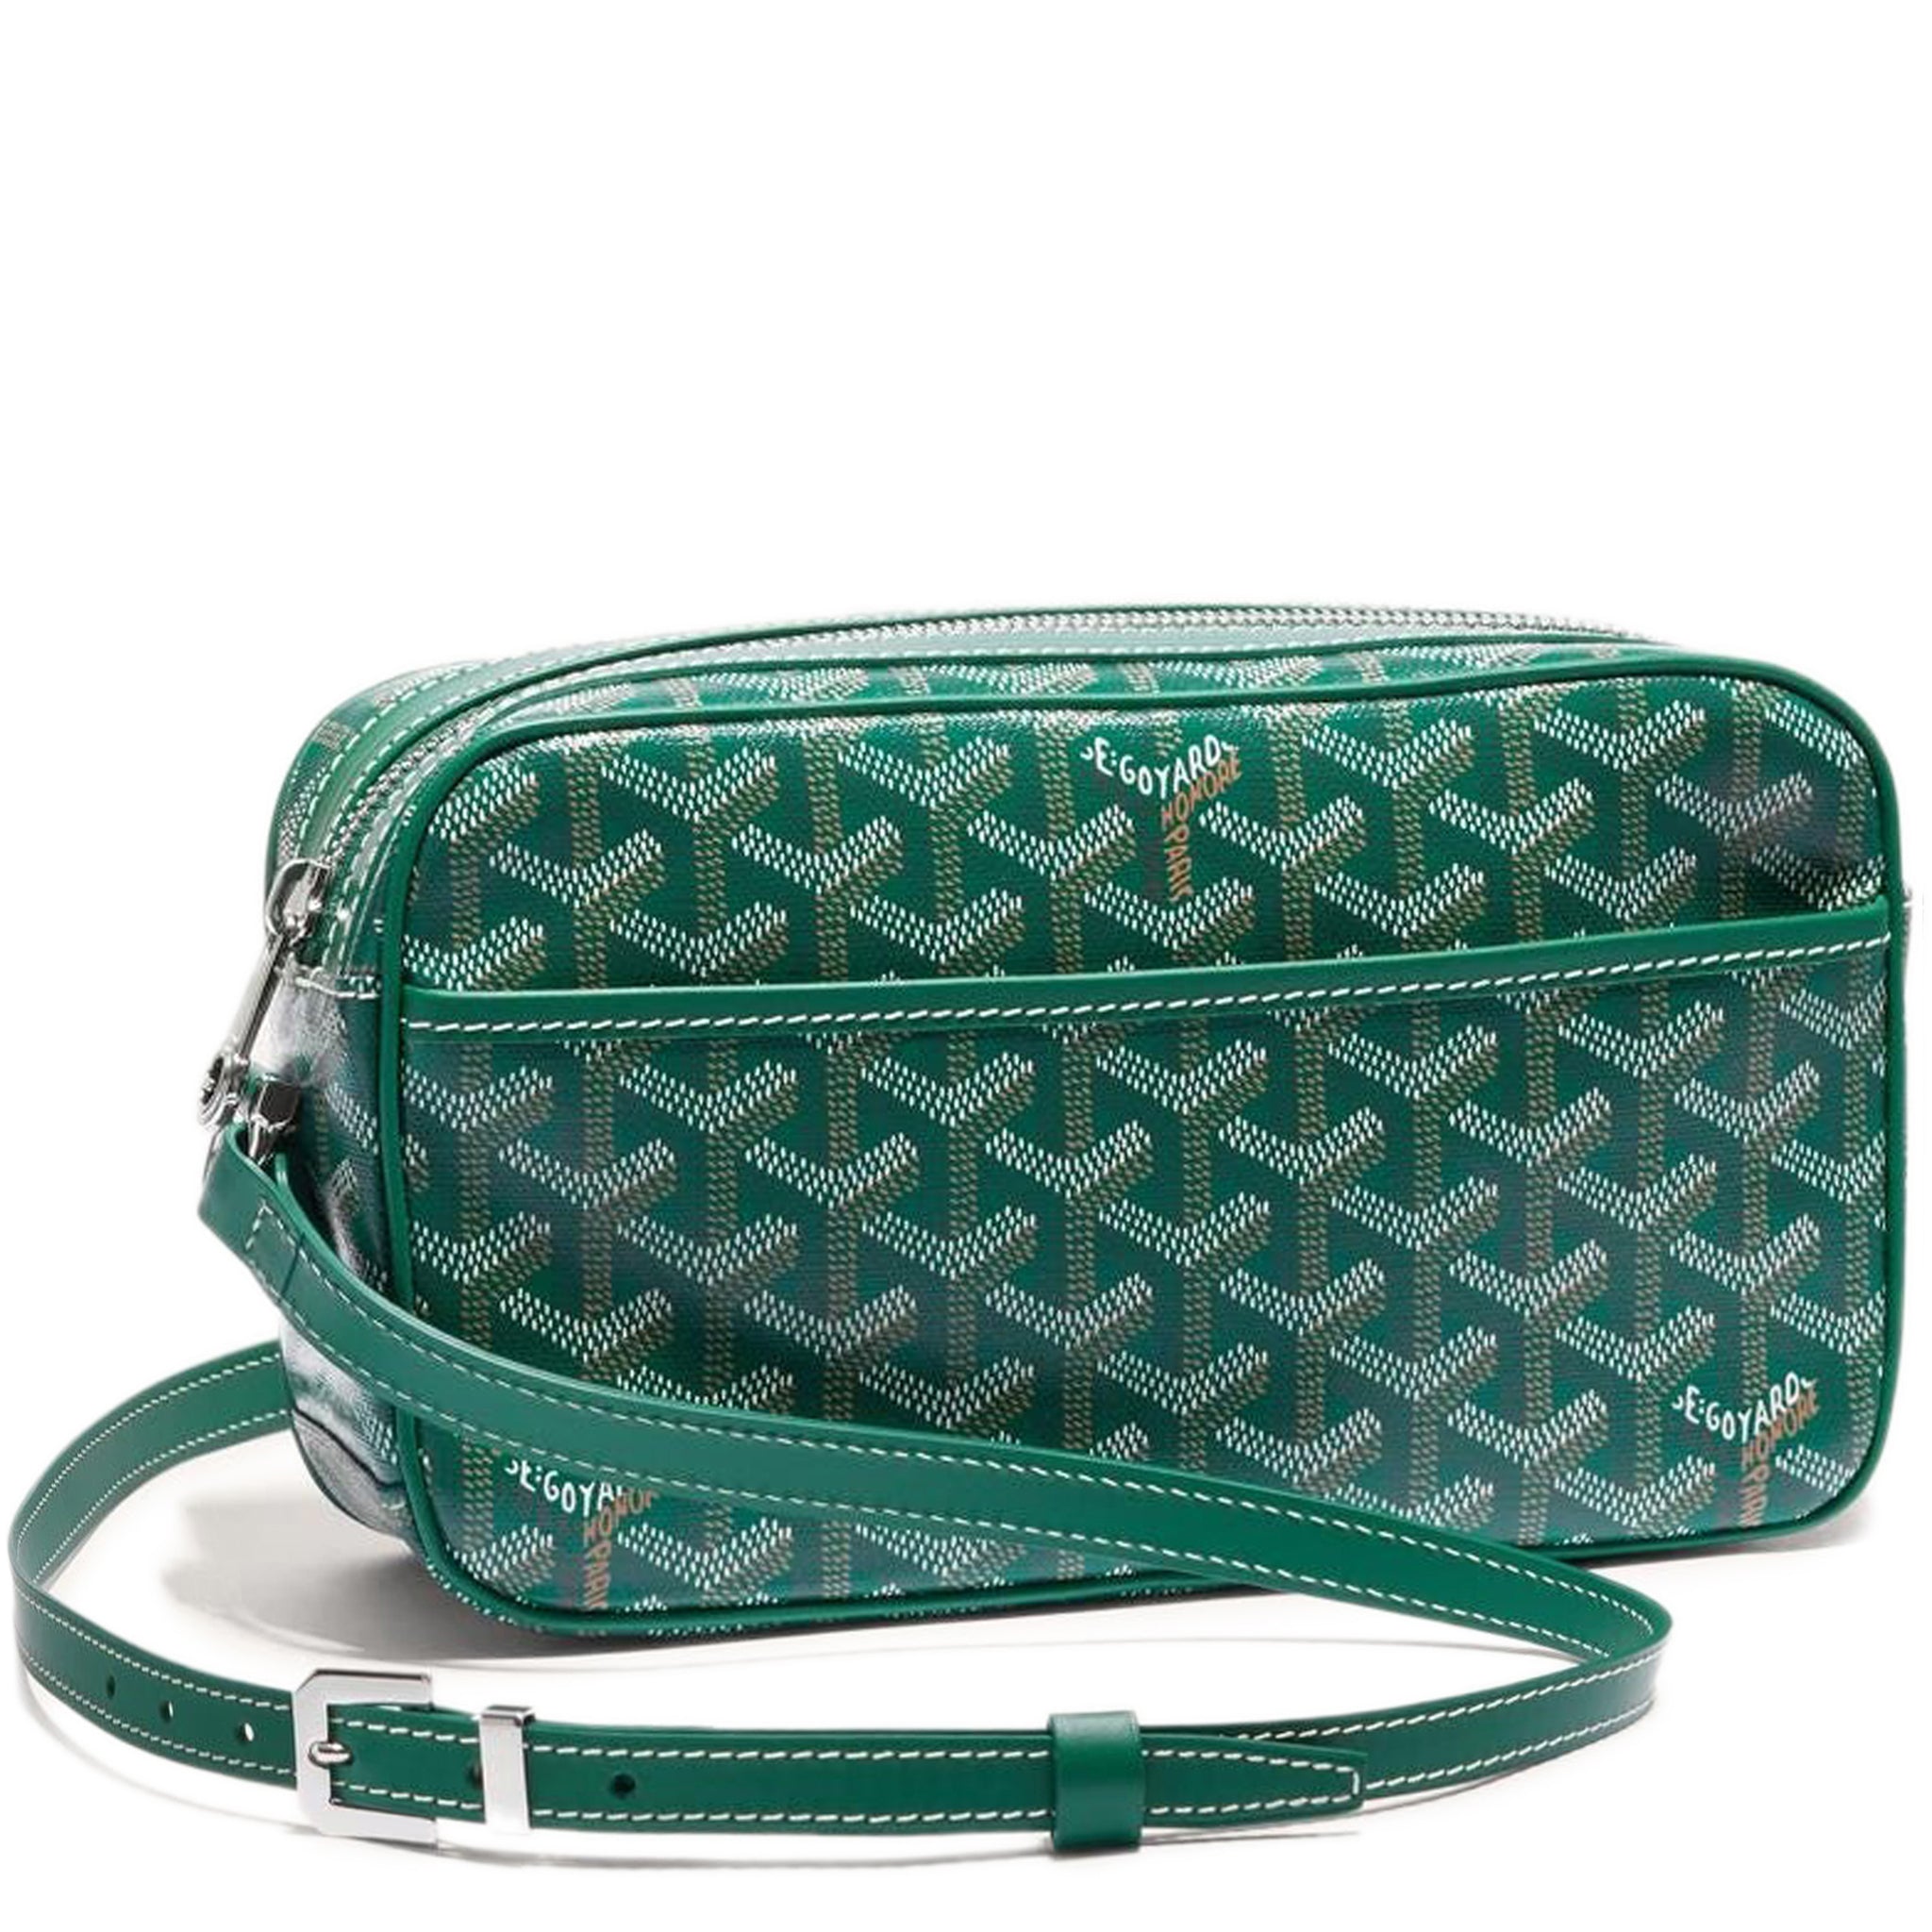 Goyard Green Bags & Handbags for Women